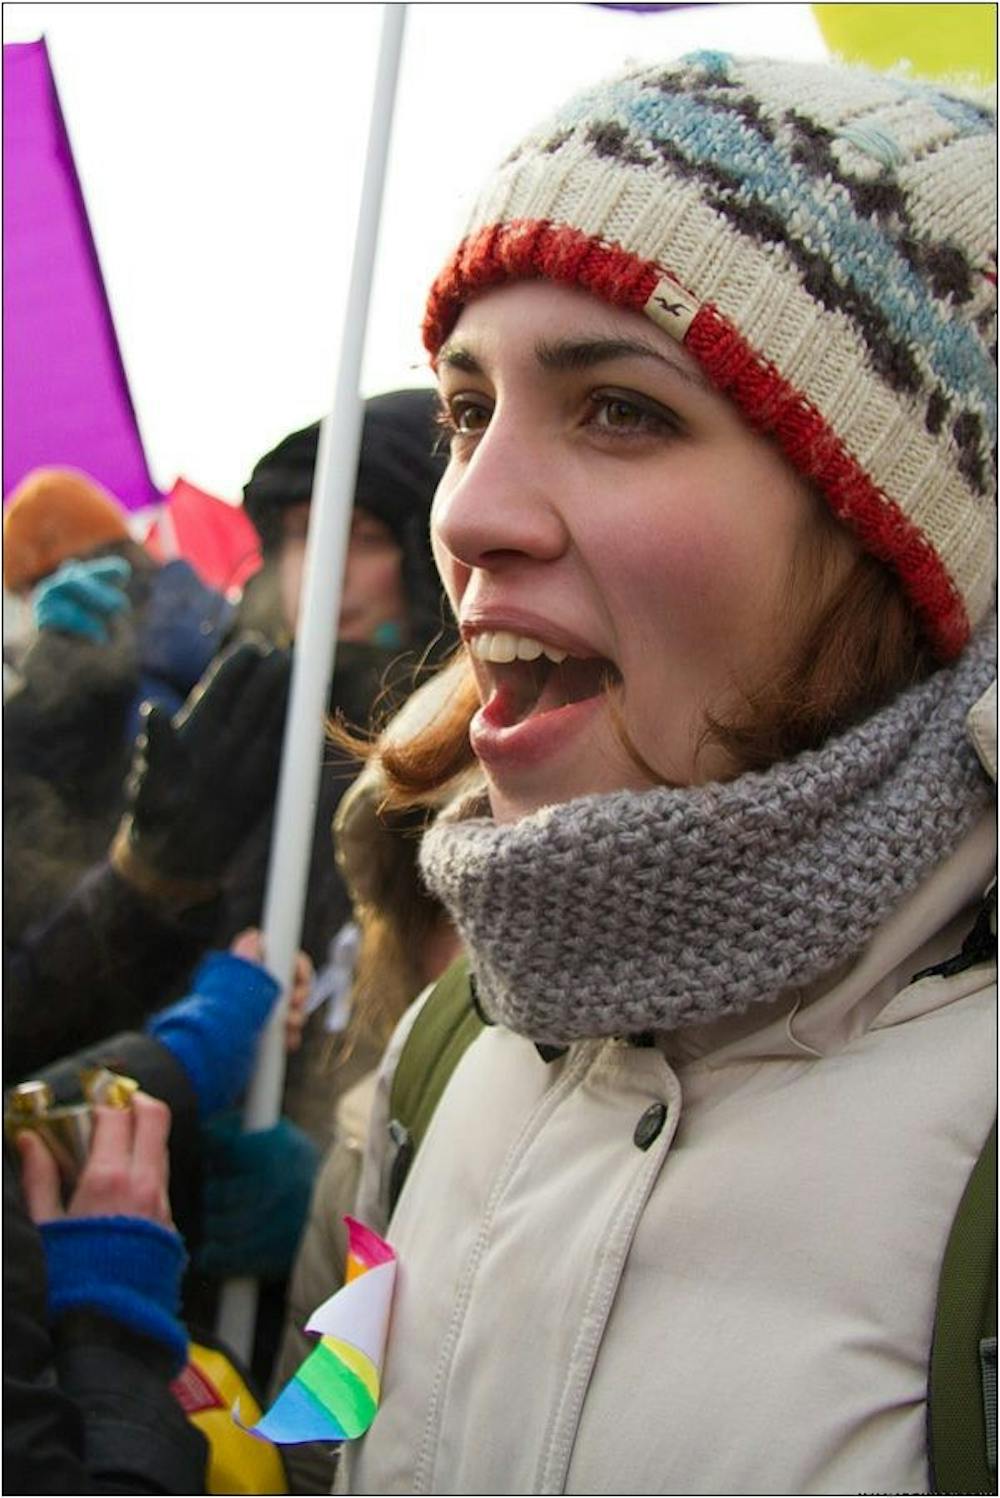 DENIS BOCHKAREV/CC BY-SA 3.0
Tolokonnikova has led protests in Russia for over a decade.